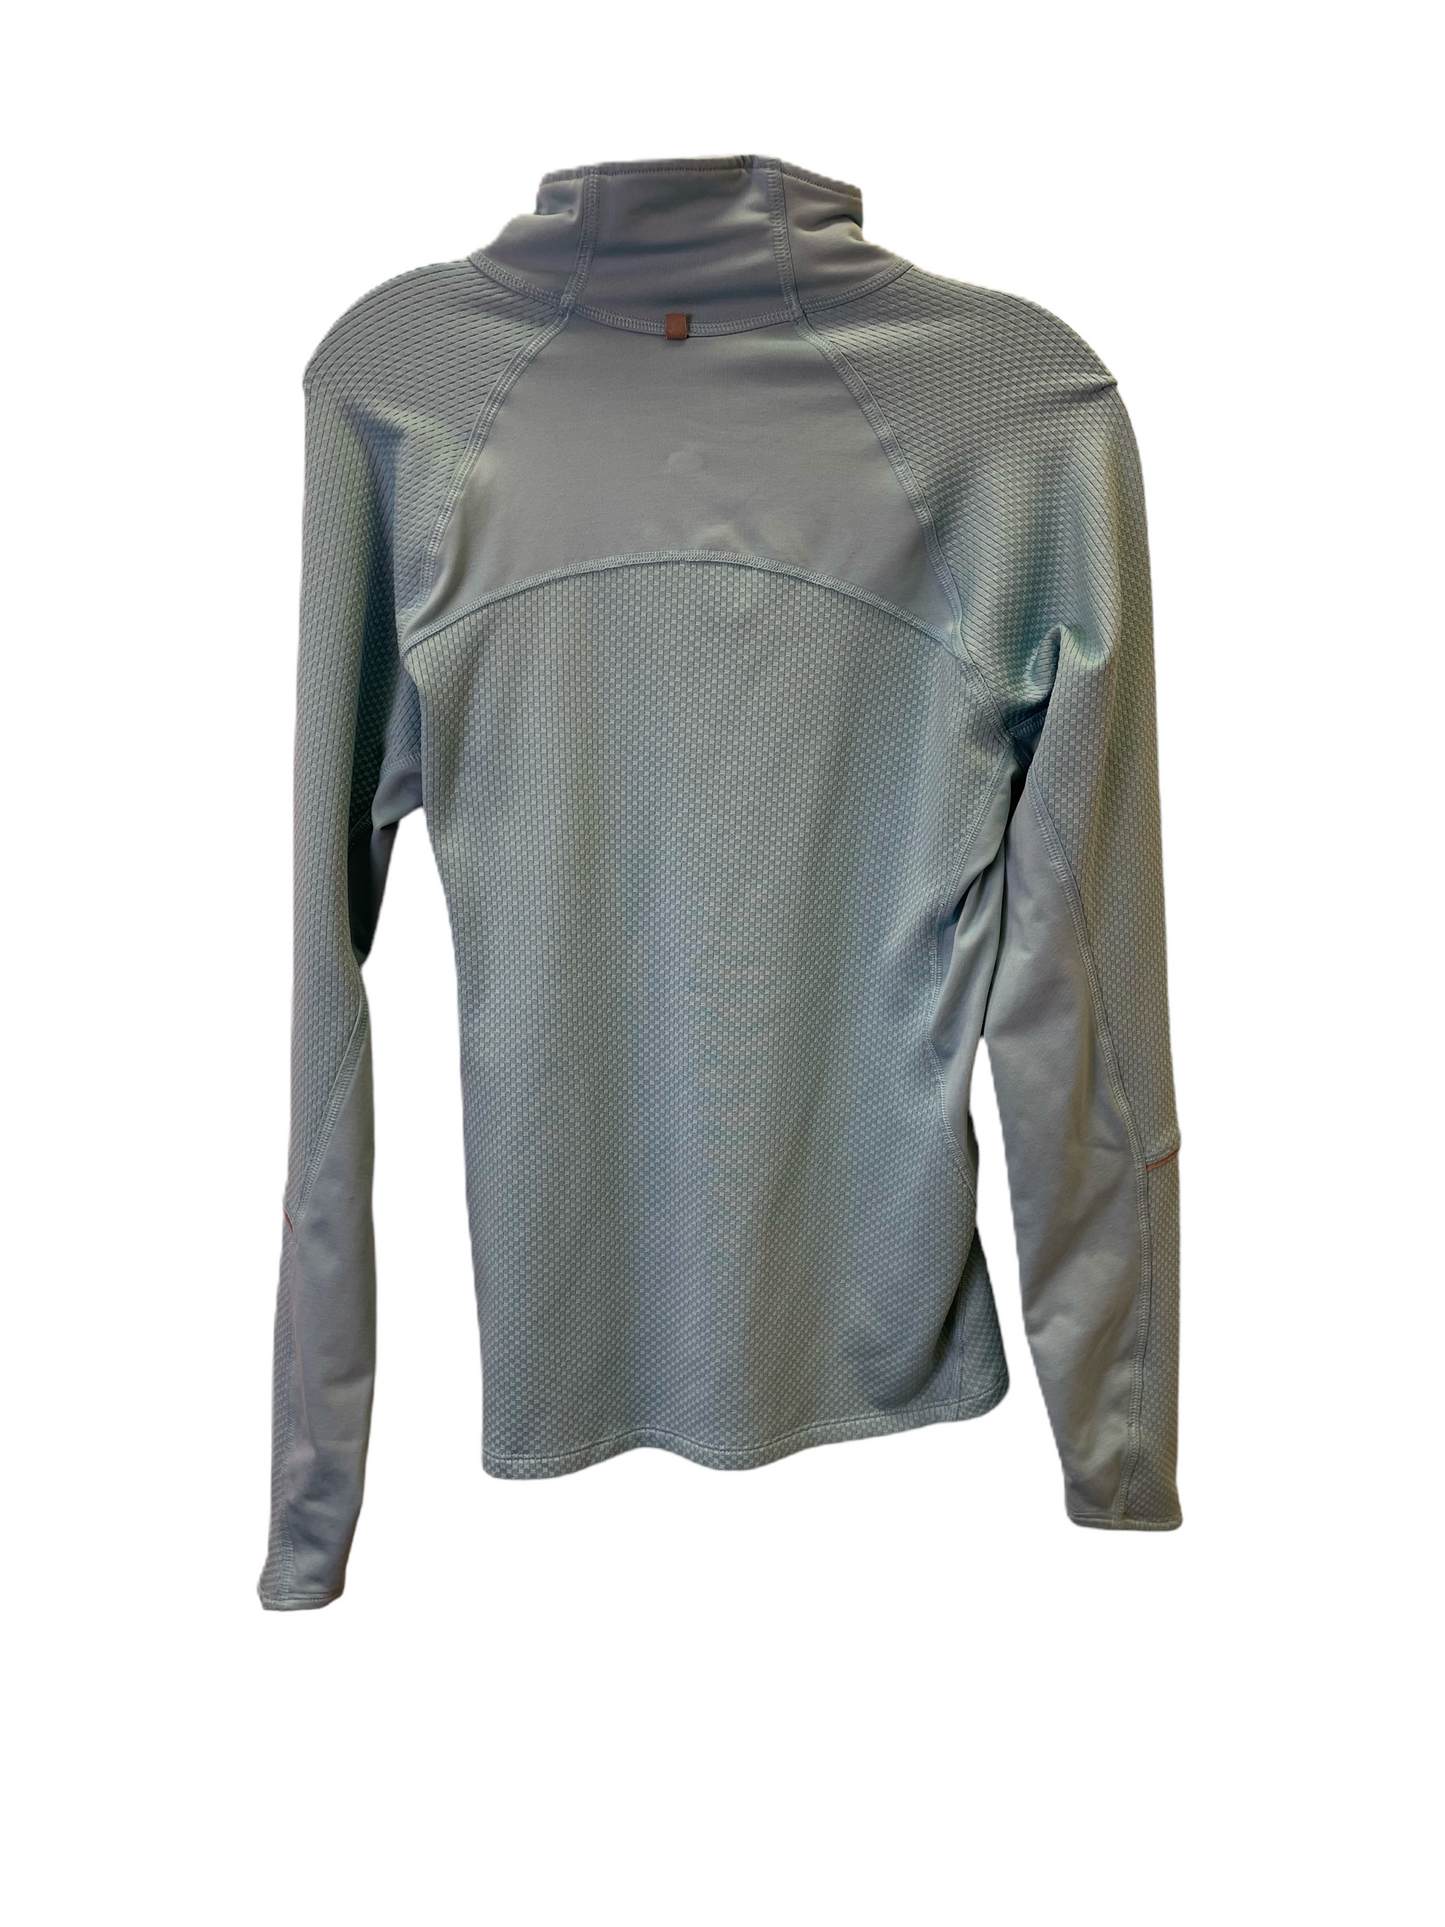 Blue Athletic Sweatshirt Collar By Nike Apparel, Size: M